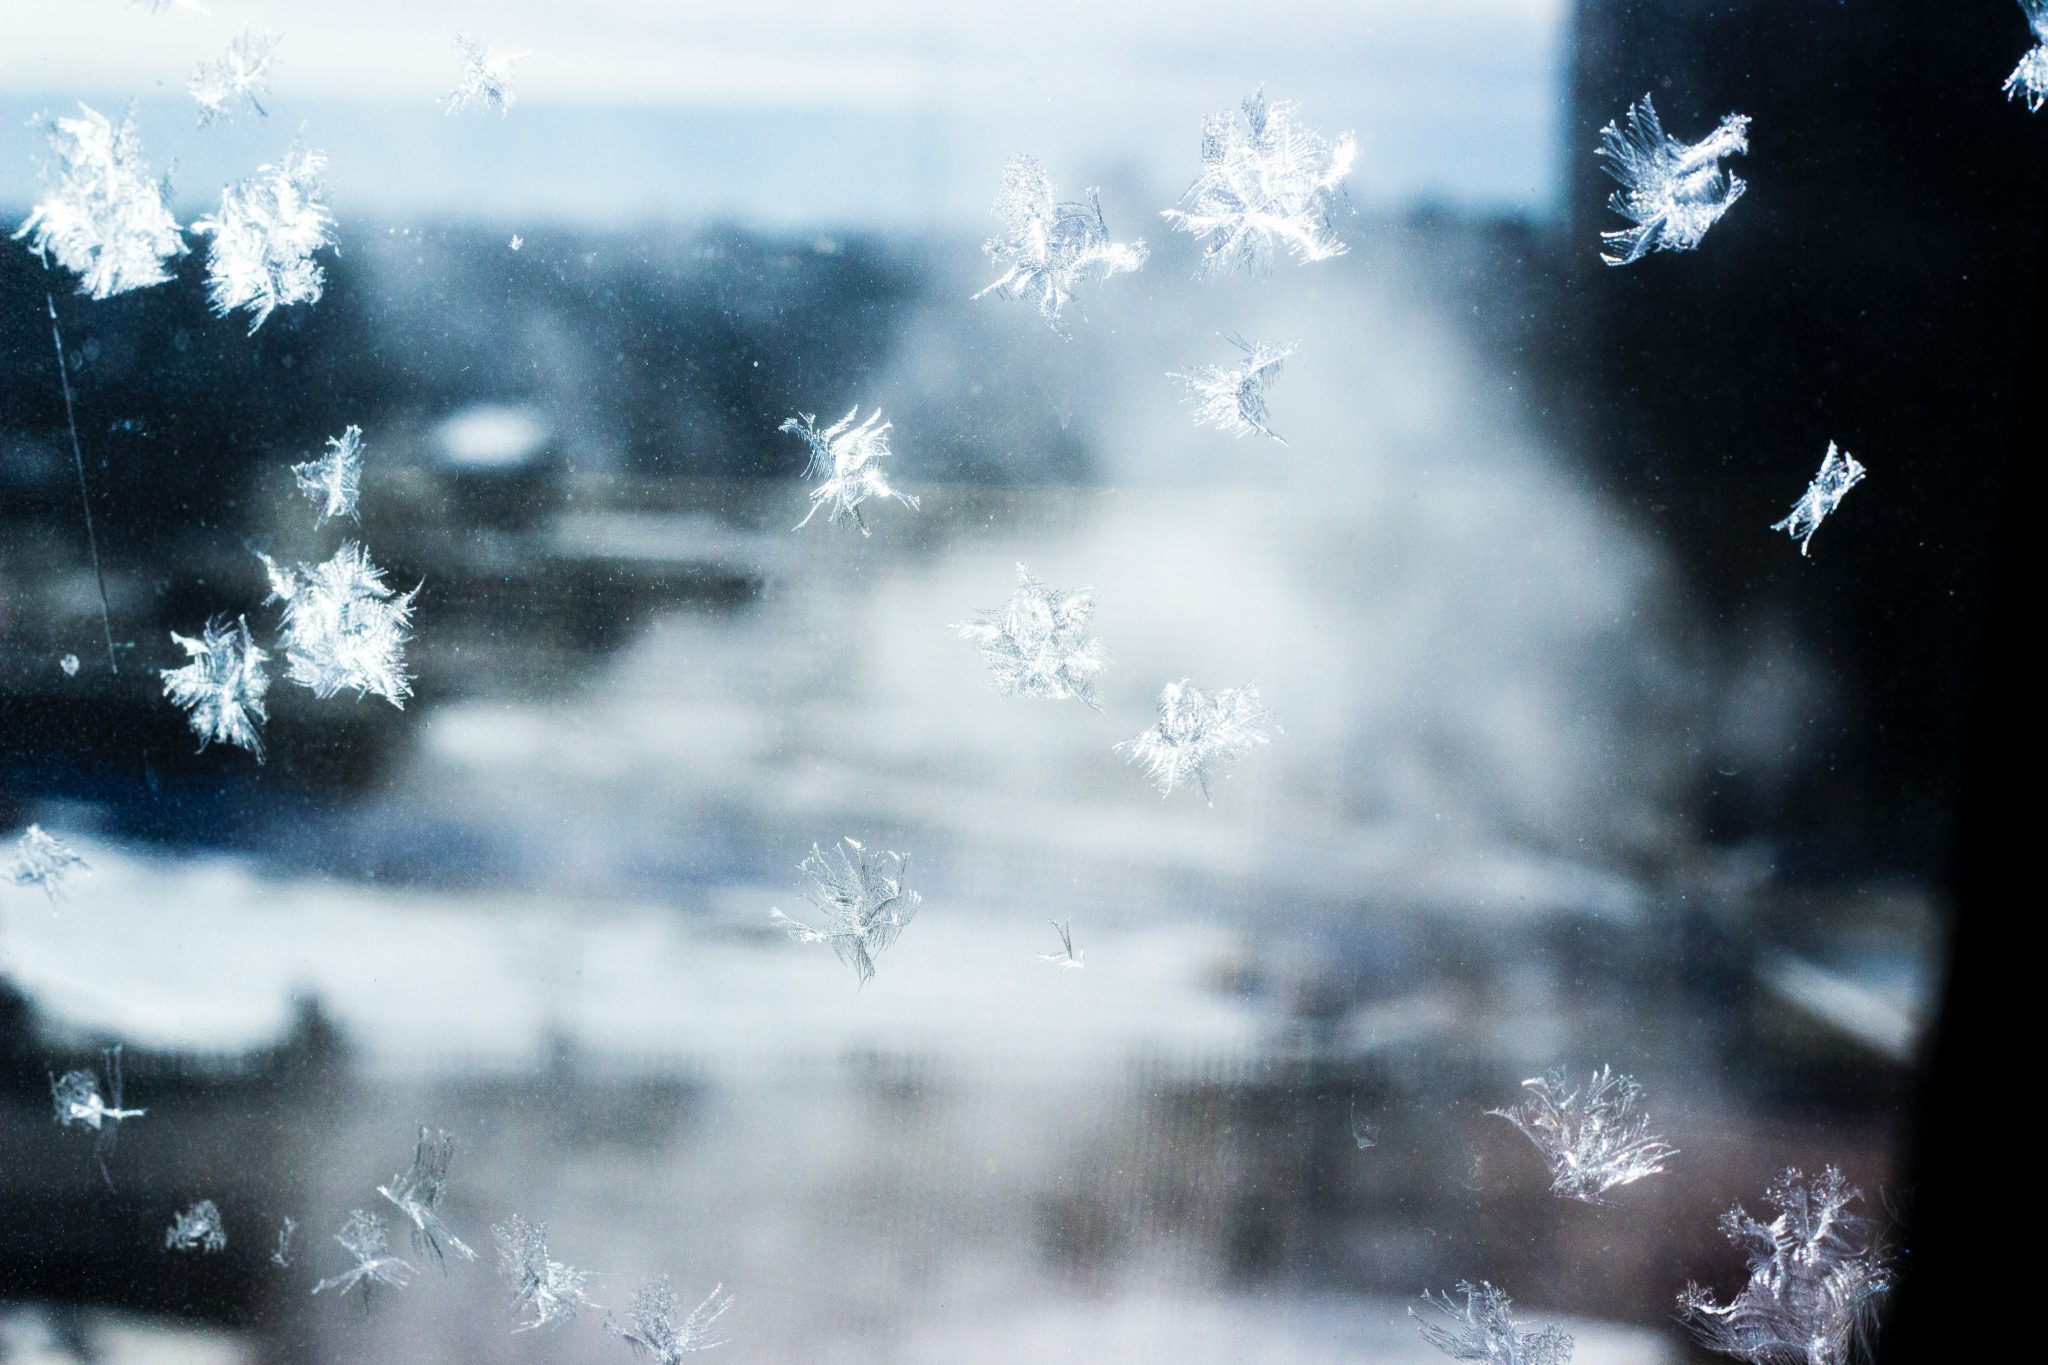 Stock photo of a frosty window.